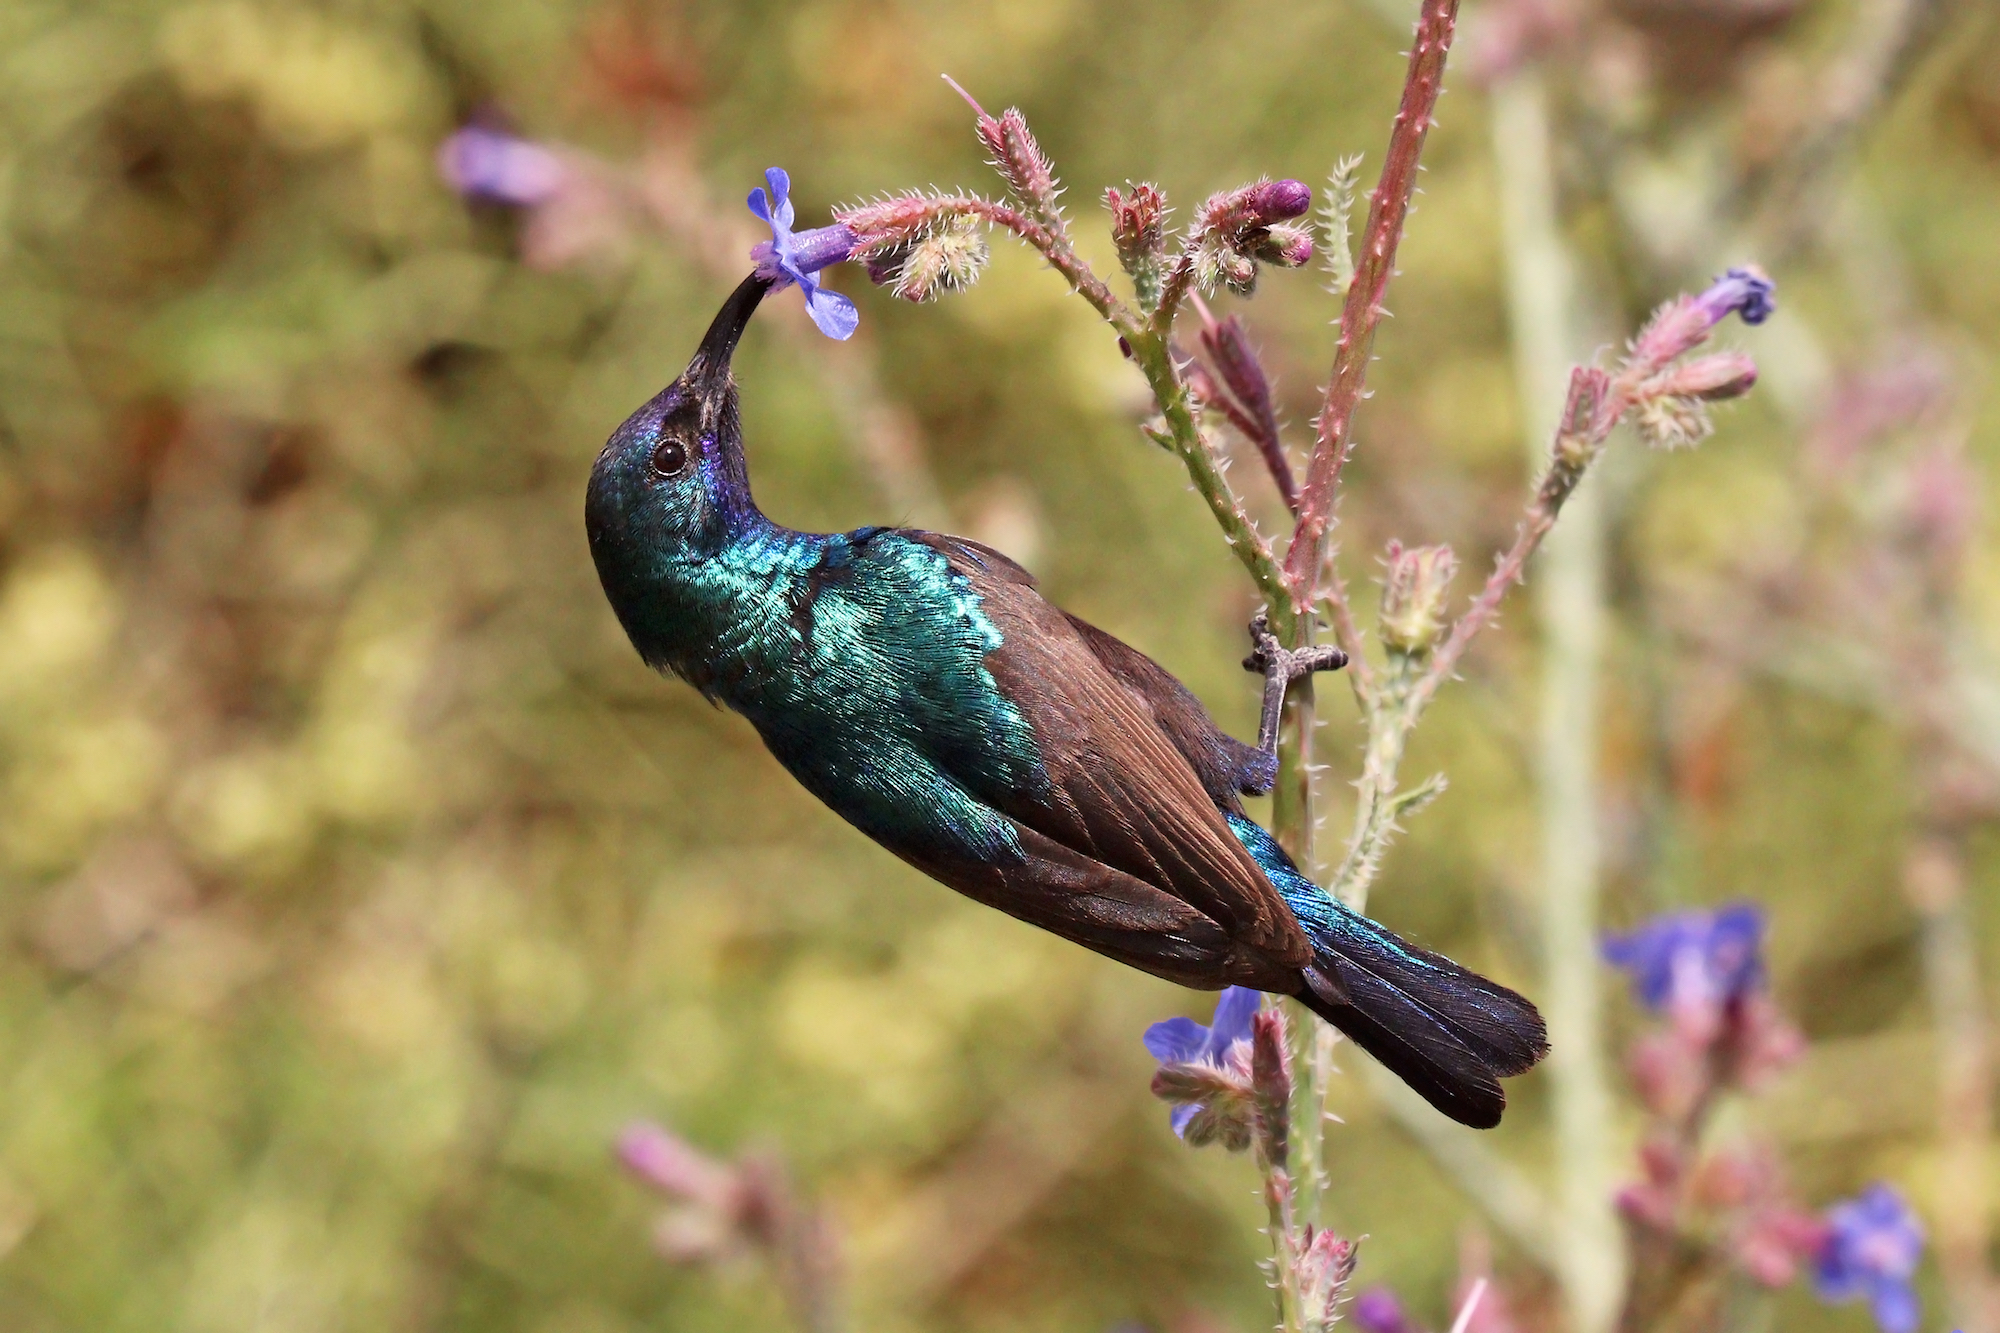 Blue & brown bird eating nectar from a flower